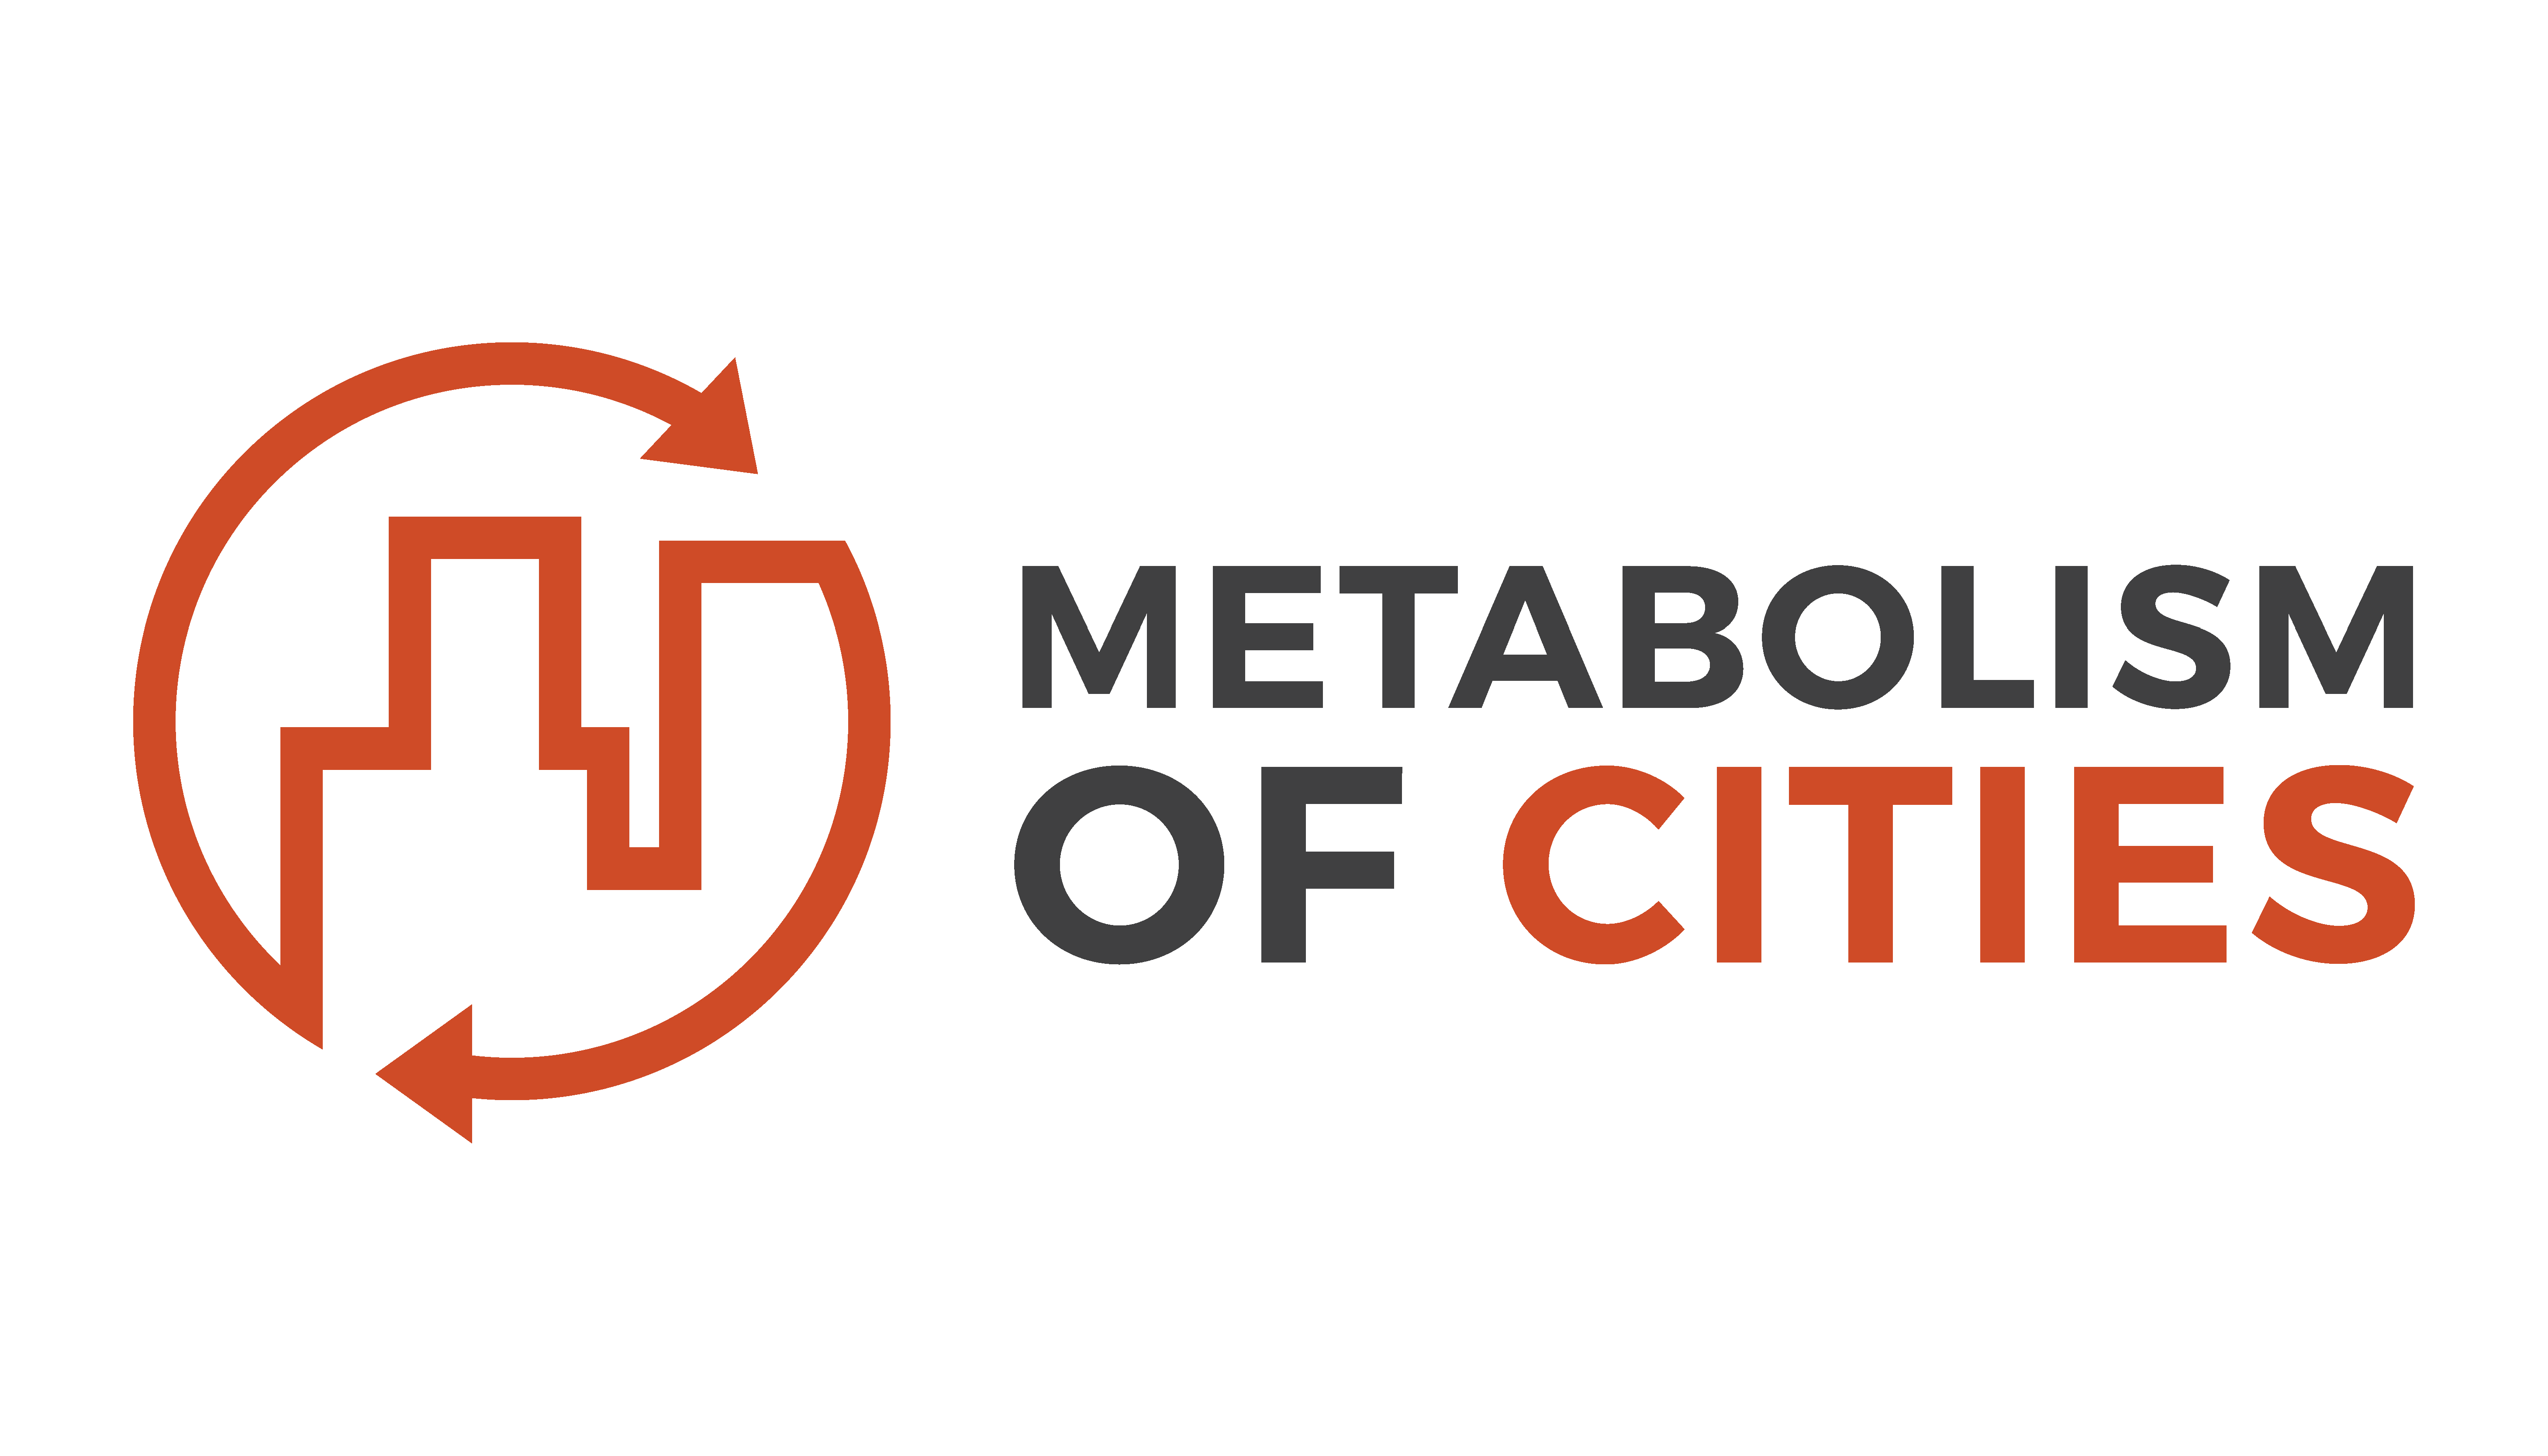 Metabolism of Cities